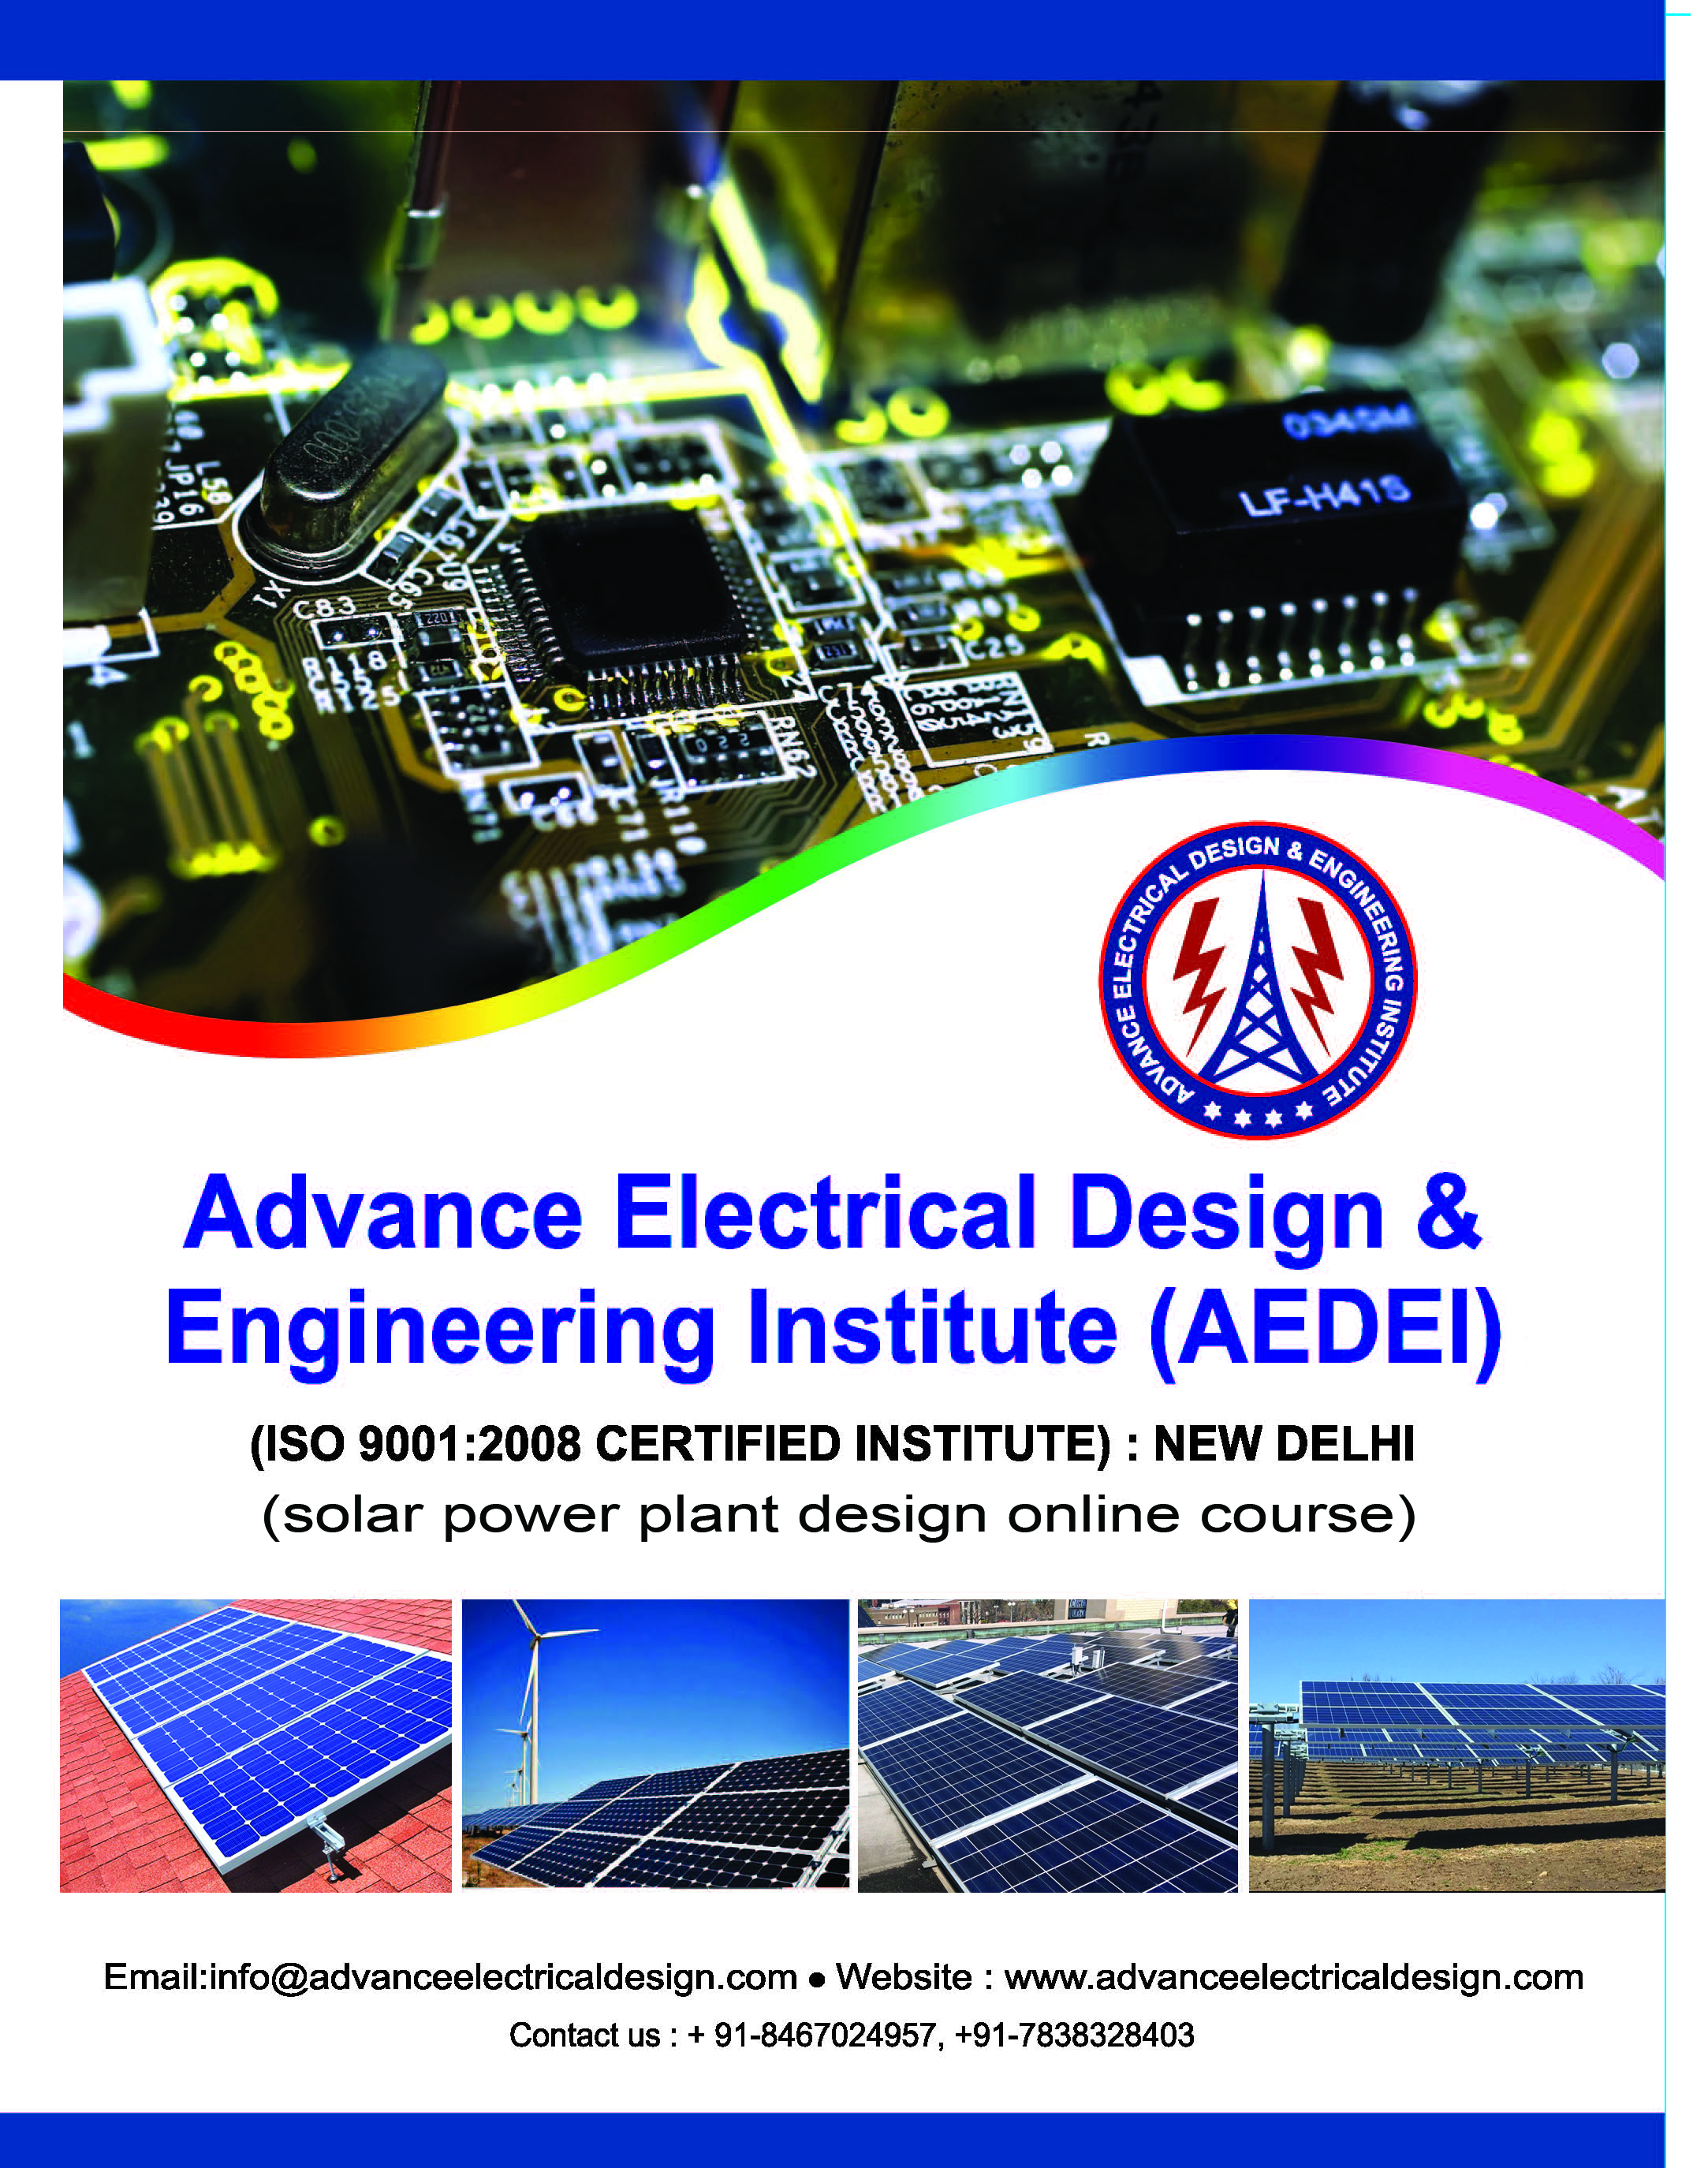 Solar design online course training